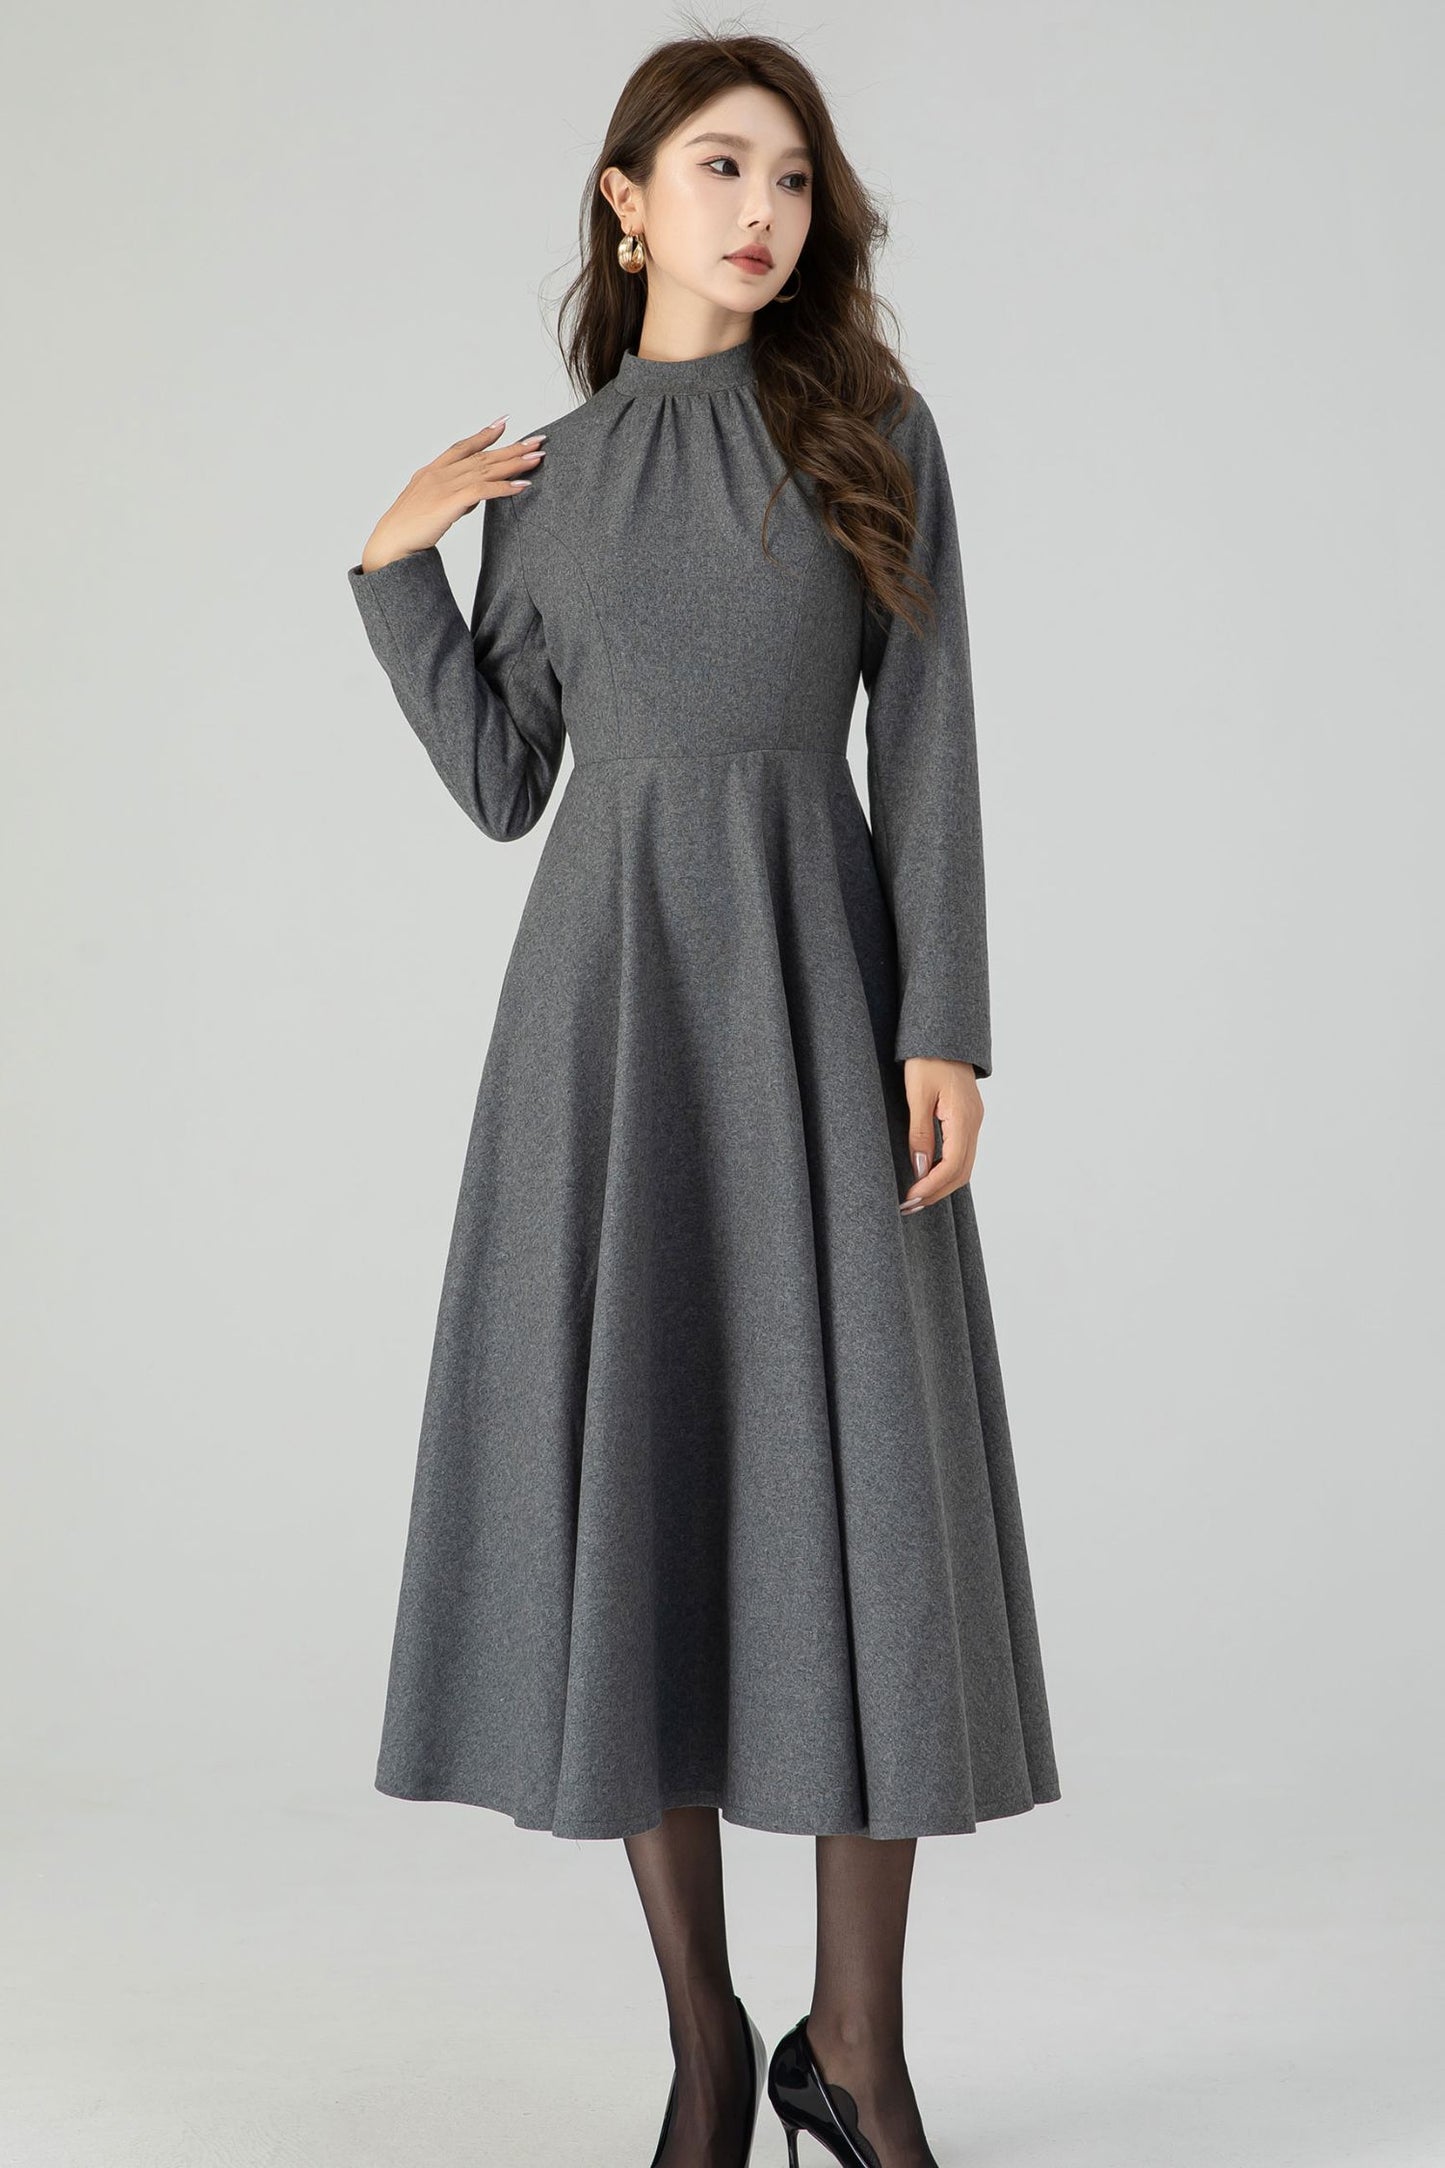 Retro gray swing wool dress 4549